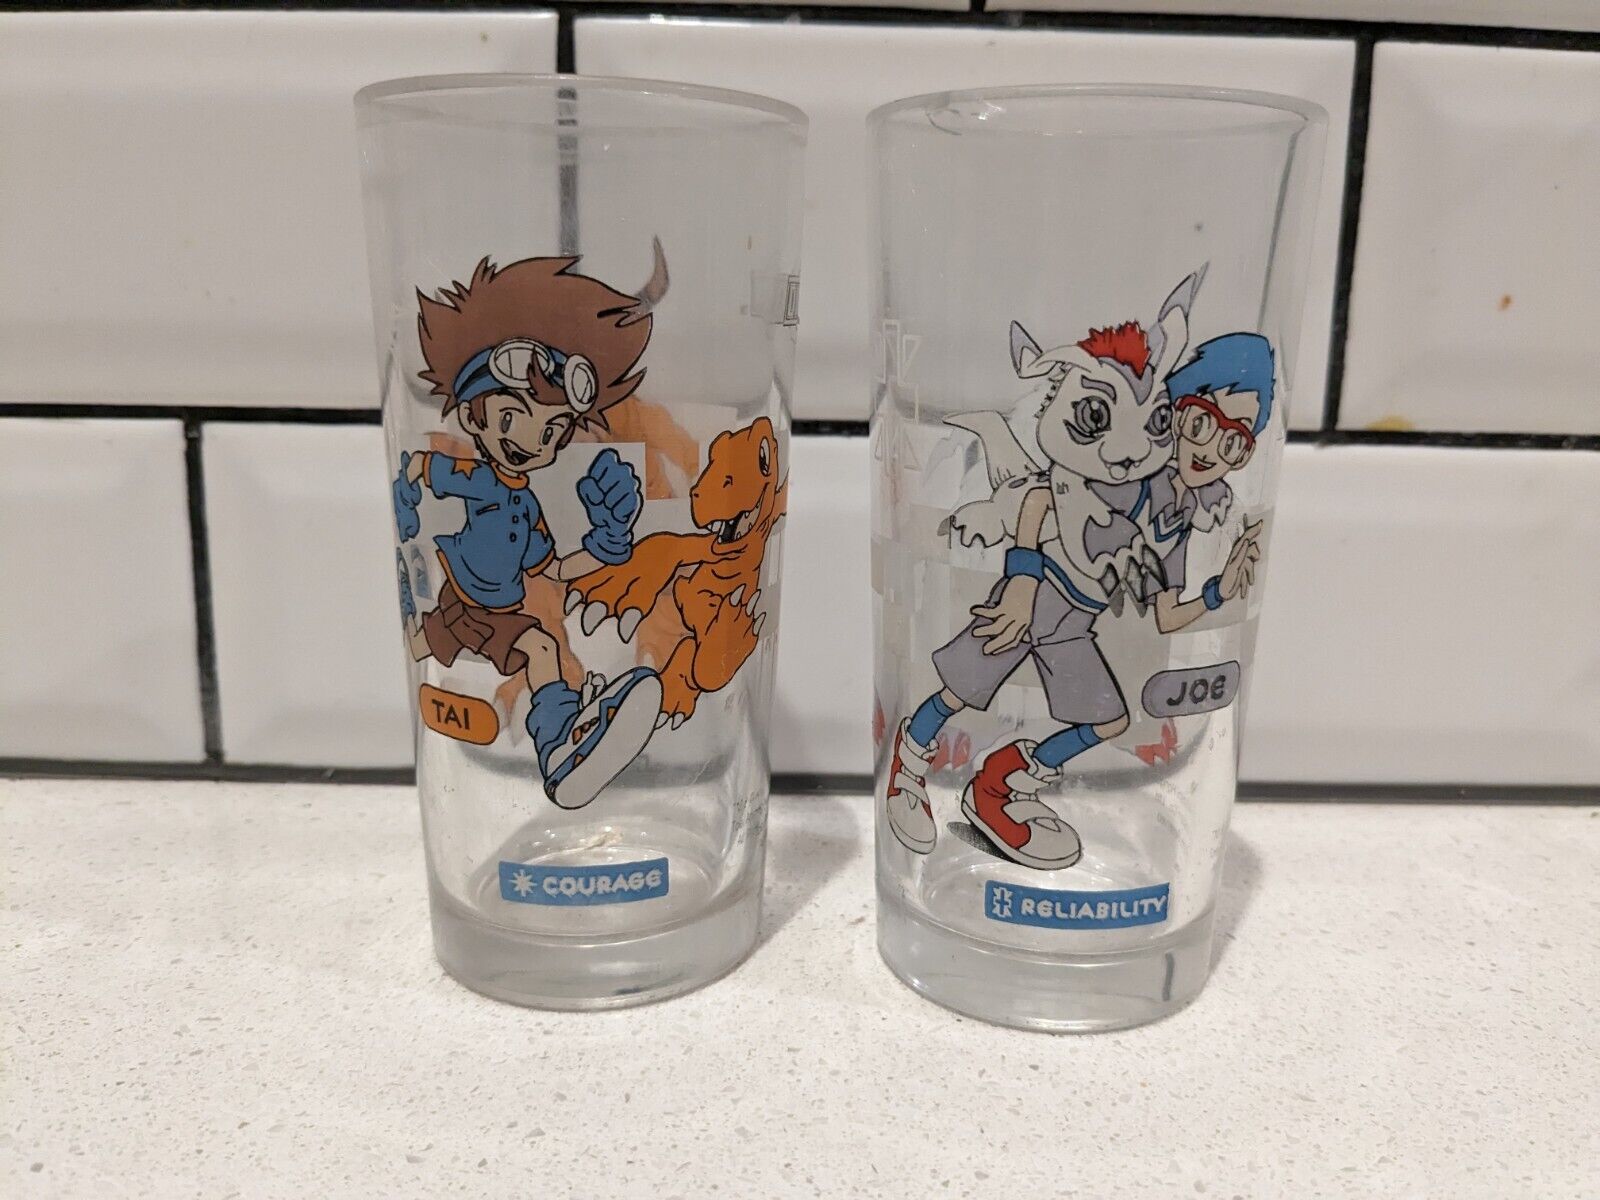 VTG 00s Digimon Collectable Nutella Glasses X 2 Kai & Joe FREE AU SHIPPING